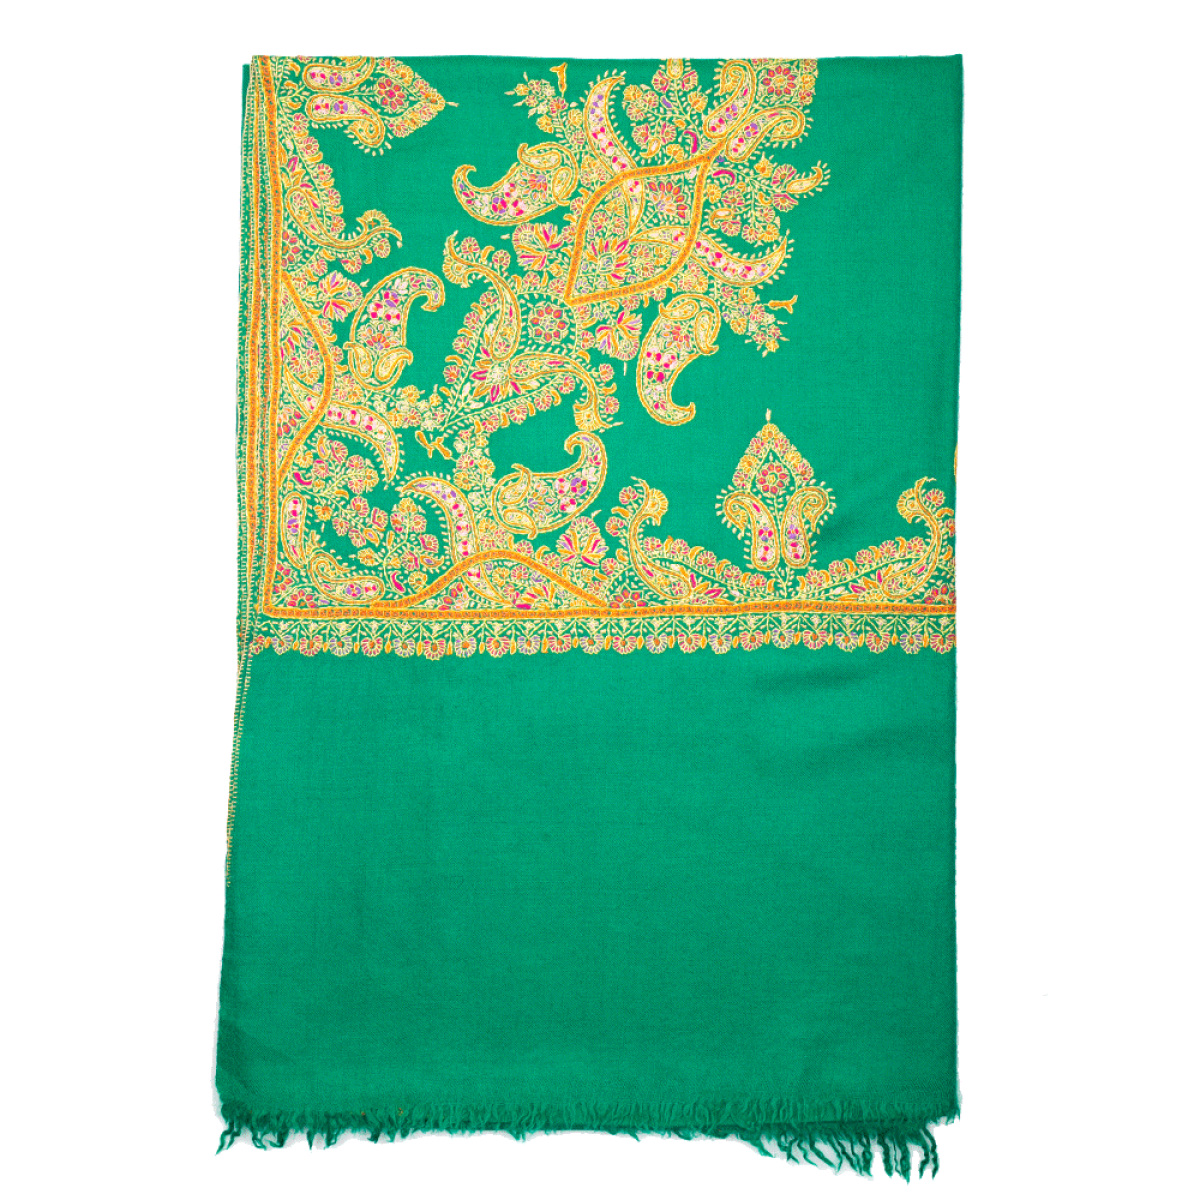 Embroidered Pashmina Shawl - Emerald Green & Yellow